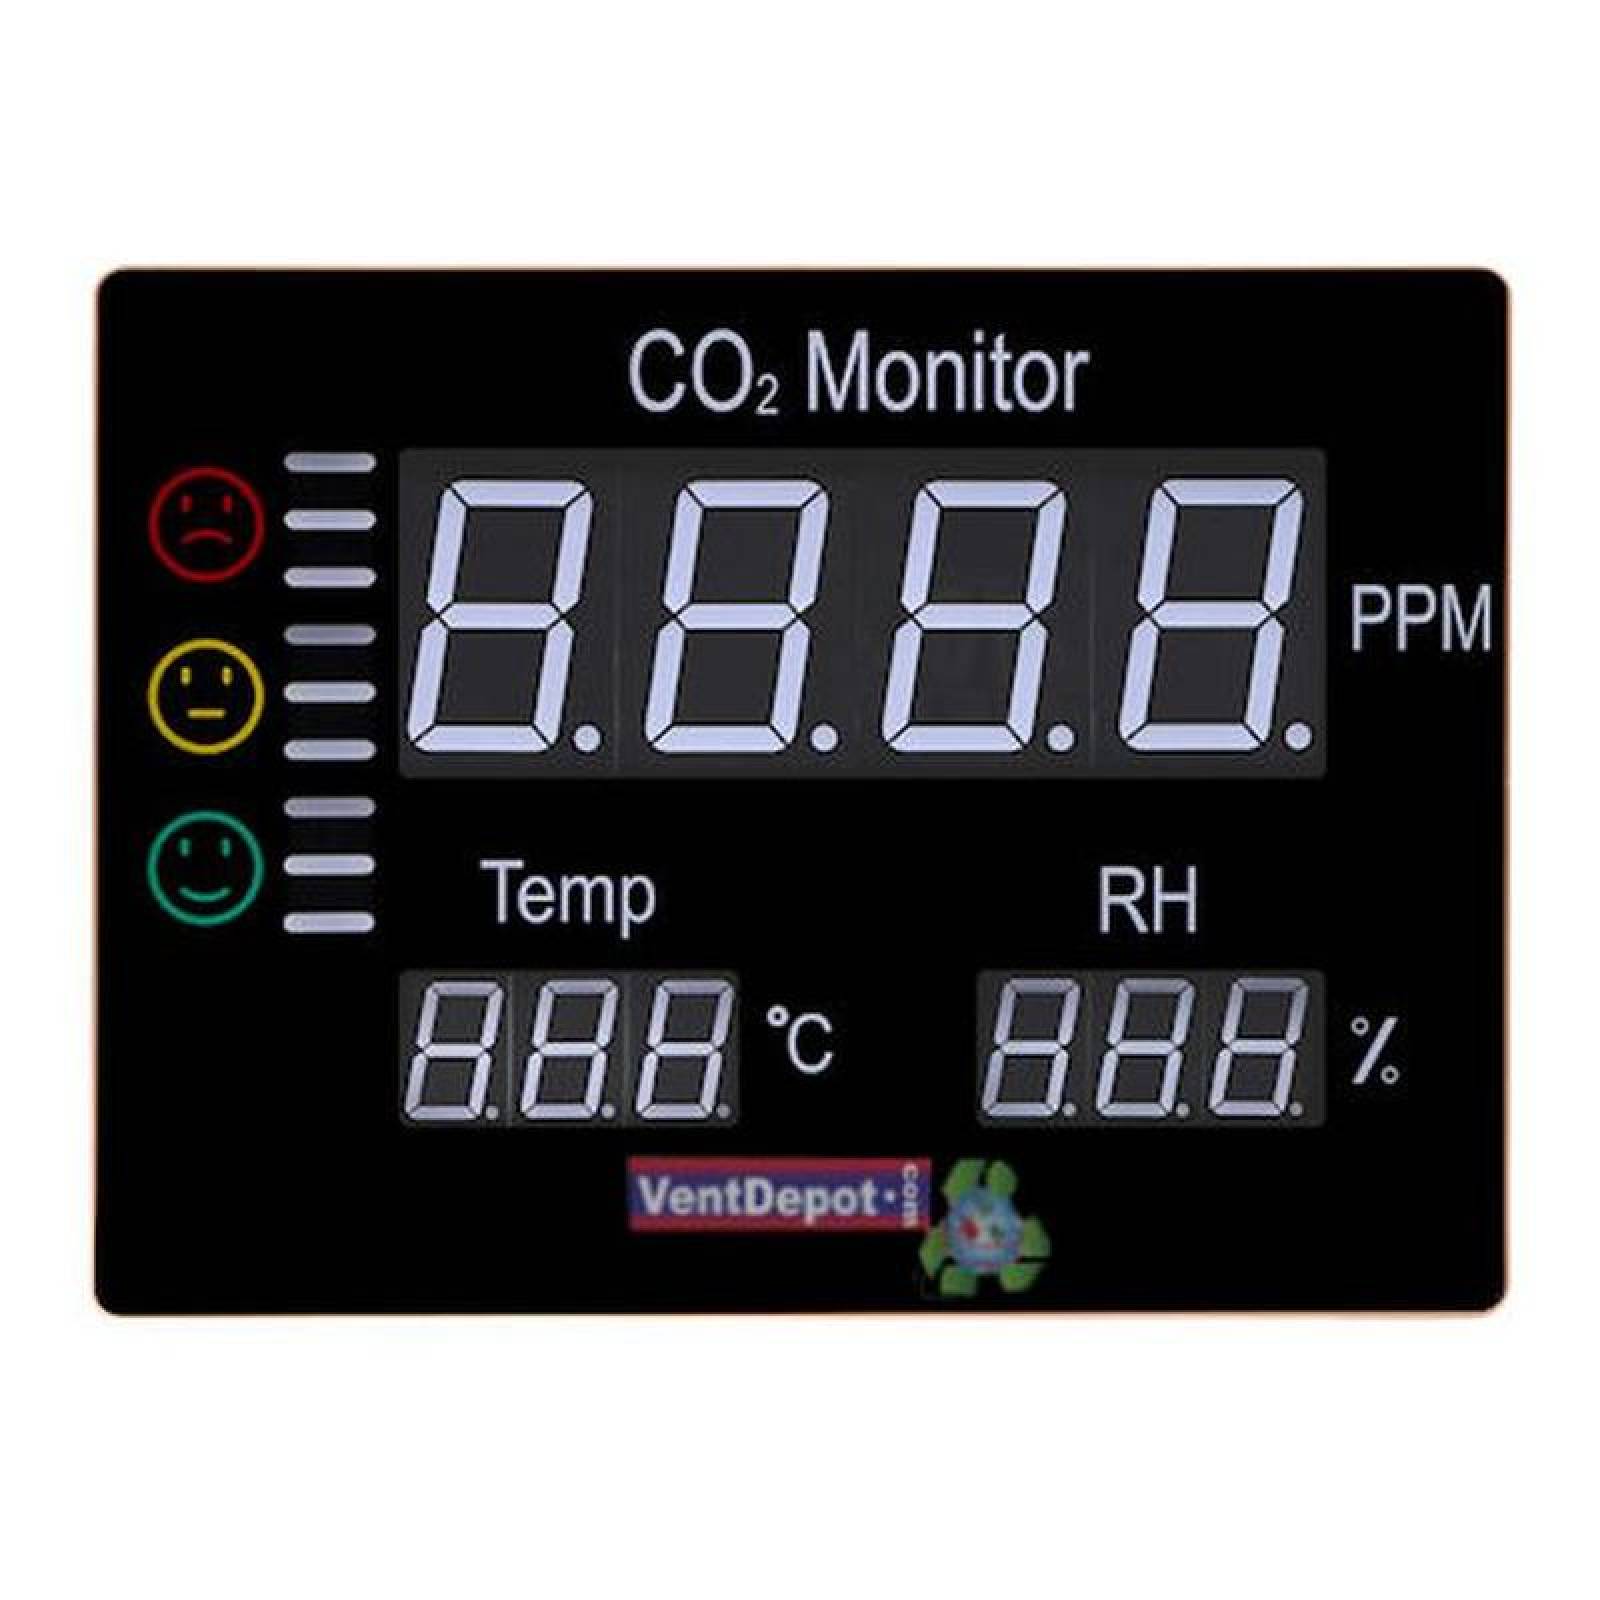 Monitor de CO2 para Industrias MXDCX-001-15 Escala CO2 de 0 a 9999 PPMTemperatura -10 a 100CHumedad 0,1 a 99,9porciento RH 220V Consumo de energía 9V, DioxMonitor